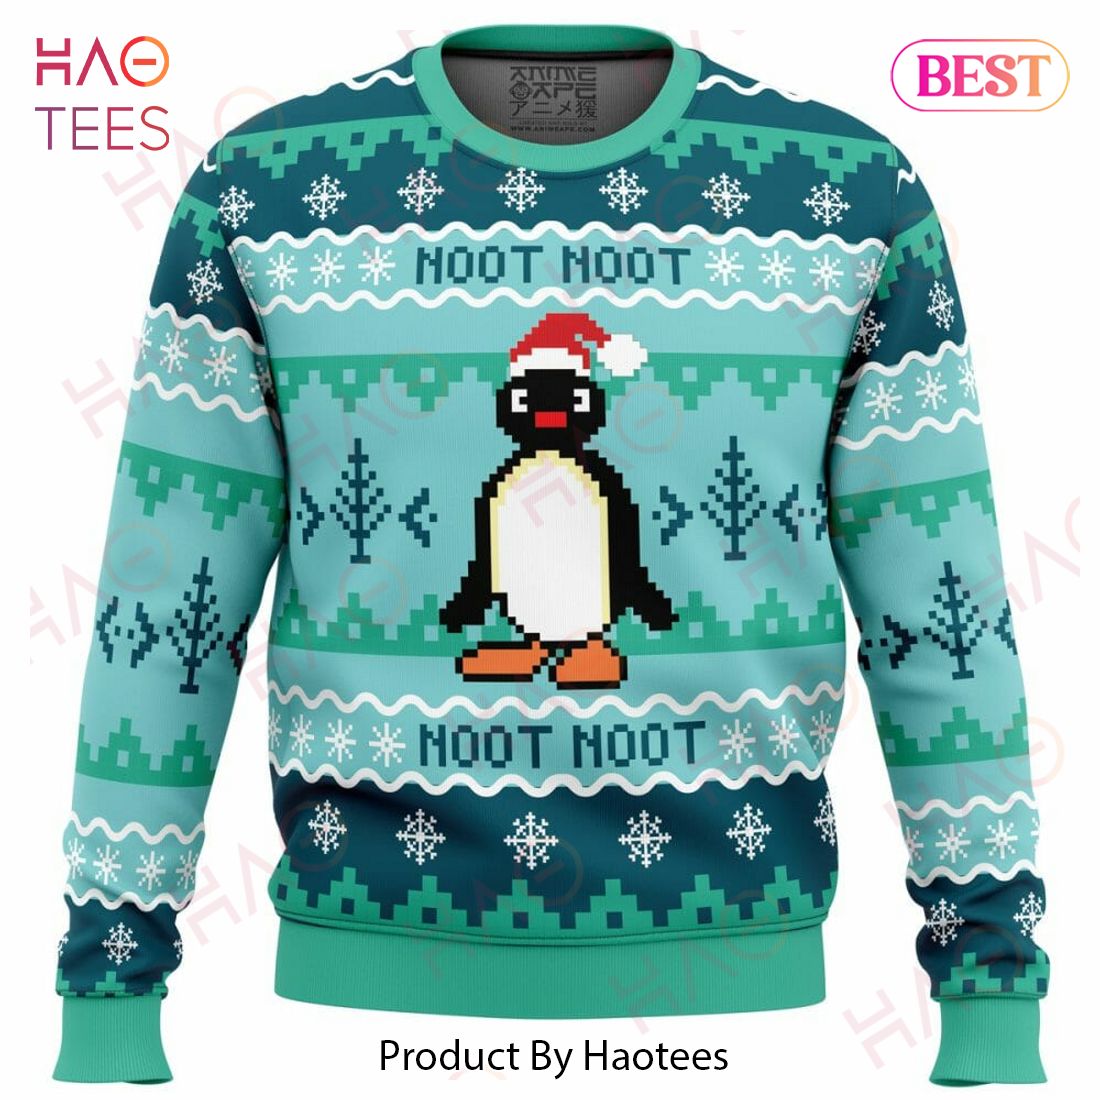 NOOT NOOT Pingu Ugly Christmas Sweater